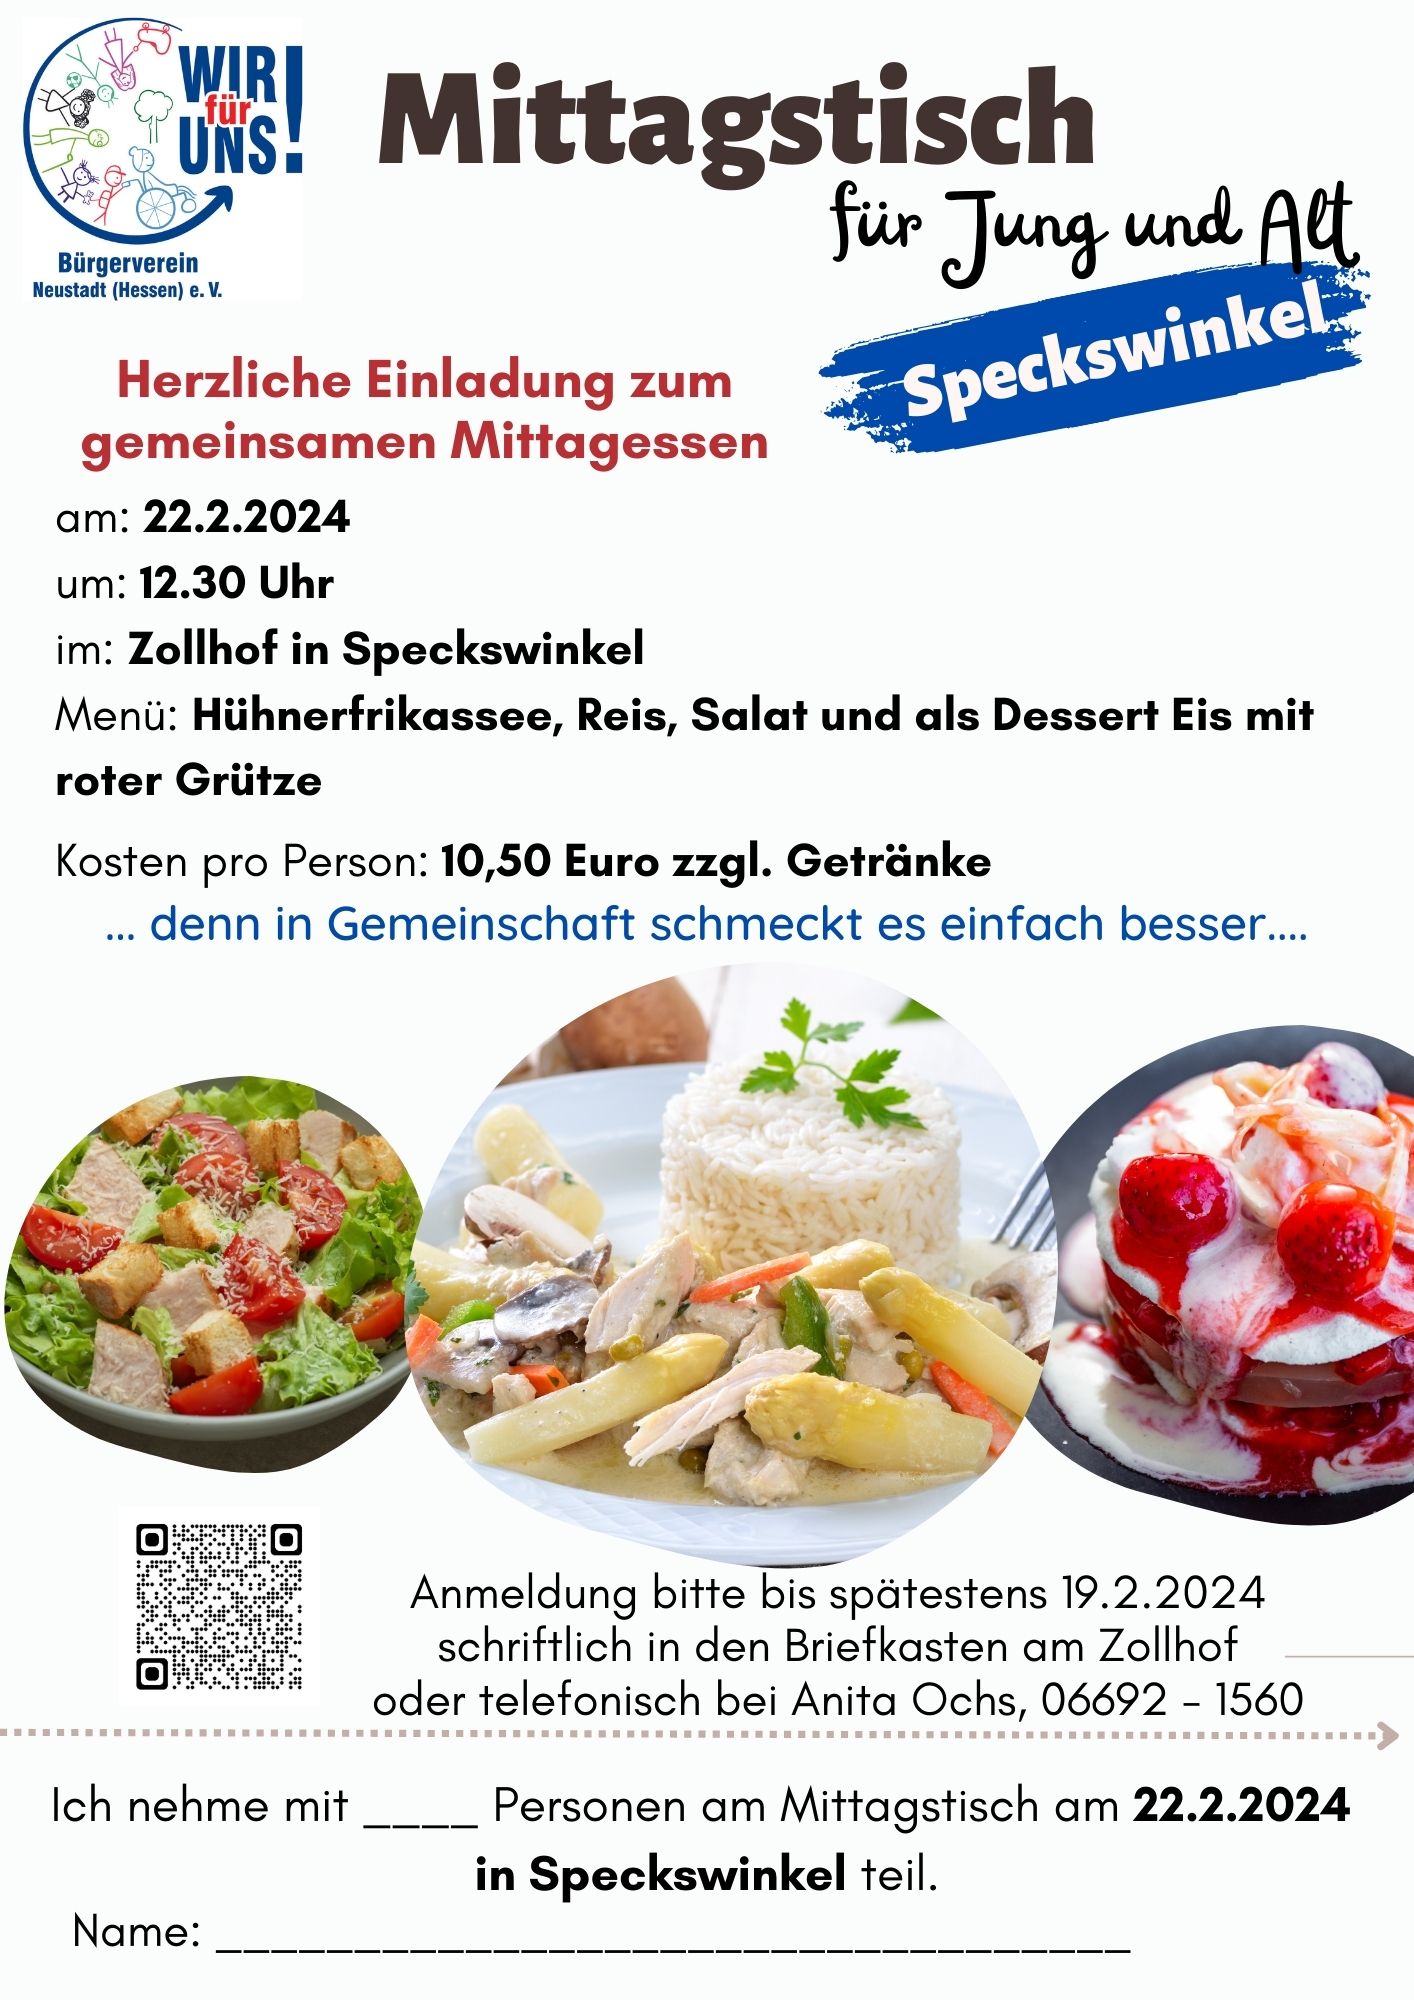 You are currently viewing Mittagstisch in Speckswinkel am 22.2.2024